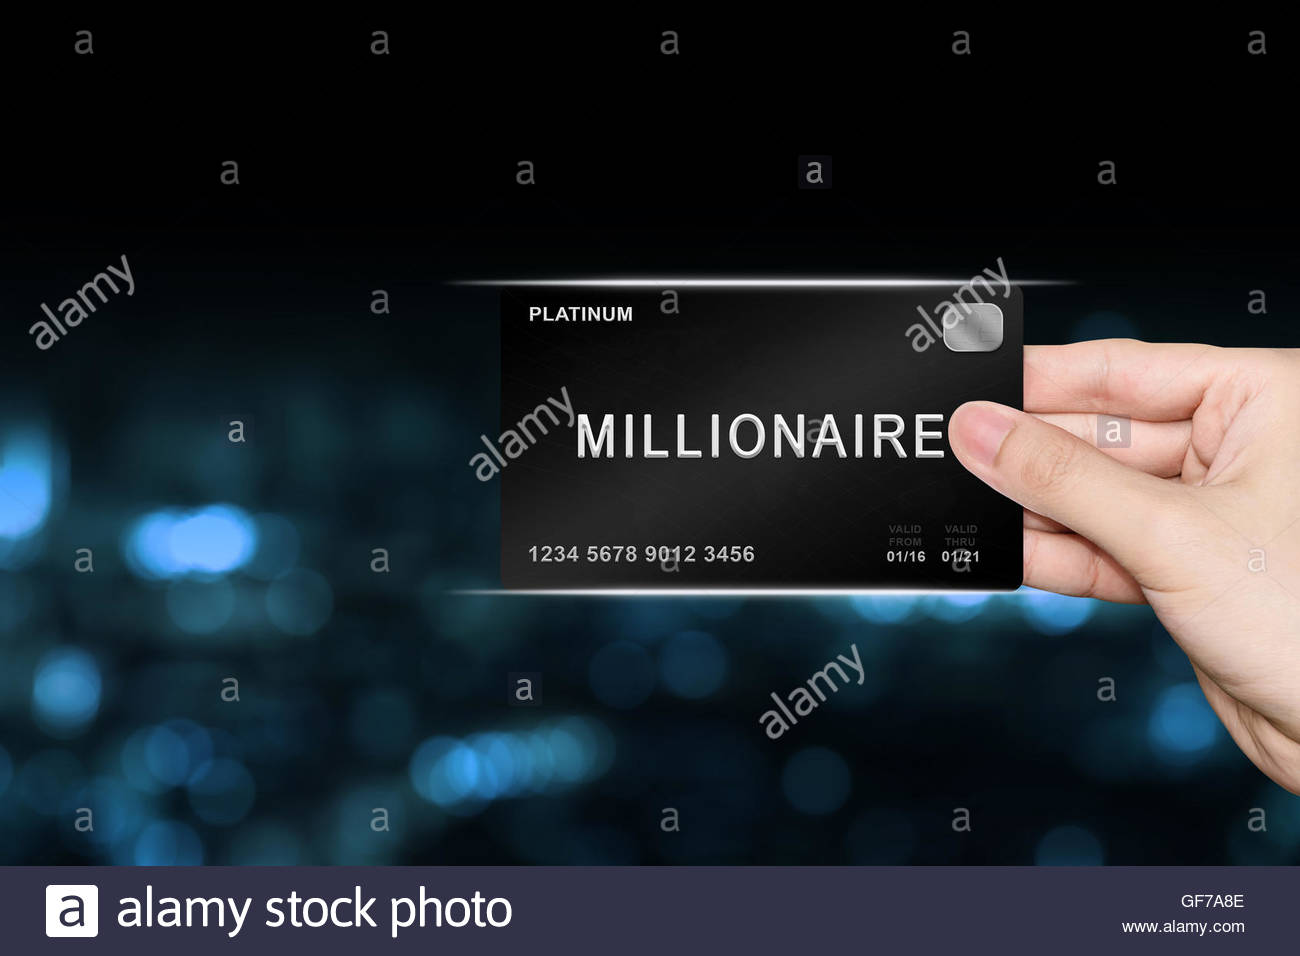 Hand Picking Millionaire Platinum Card On Blur Background Stock